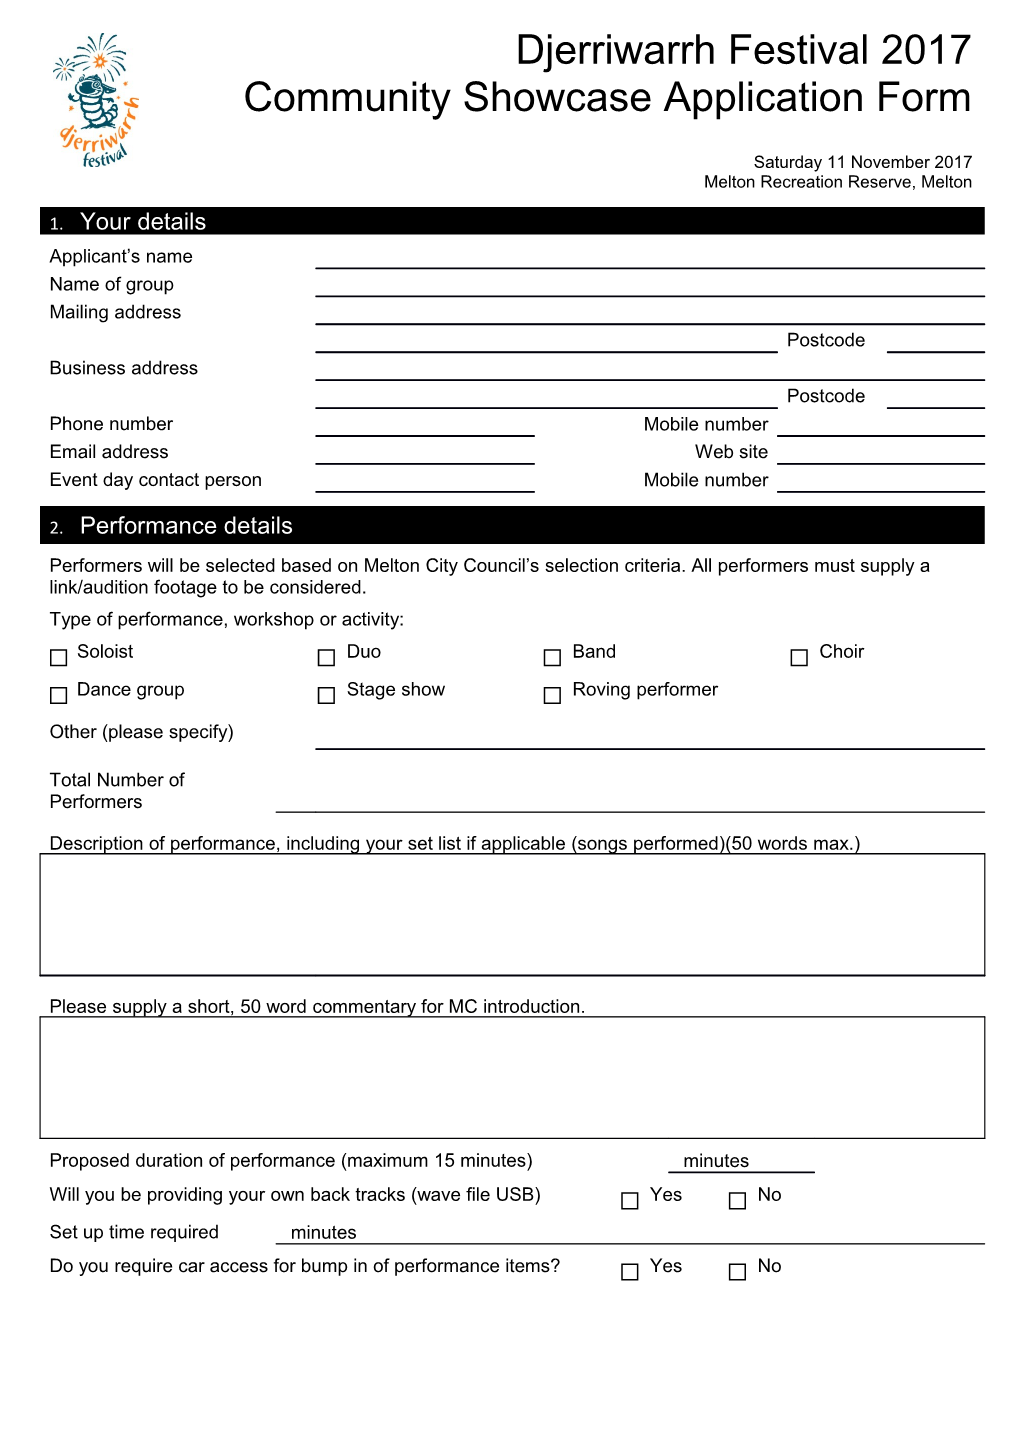 Community Showcase Application Form